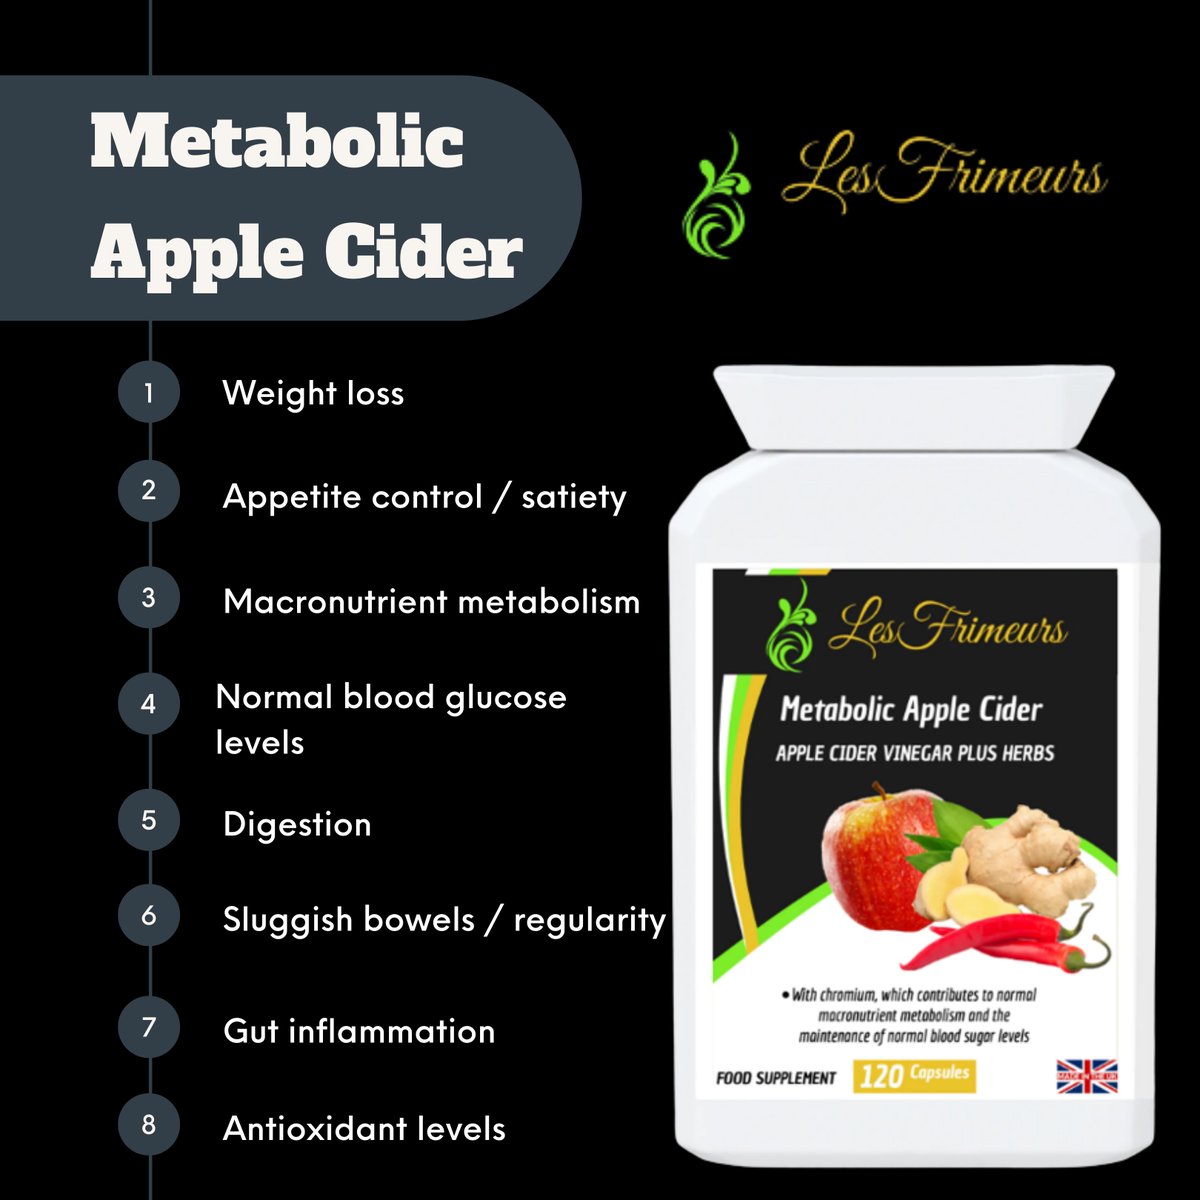 Metabolic apple cider #lesfrimeurs #doctorsays
#acv #applecidervinegar #applecide #Weightloss #Appetitecontrol #Digestion #bowels #constipation #Antioxidant #foodsupplements #nutritionalsupplement #supplement #health